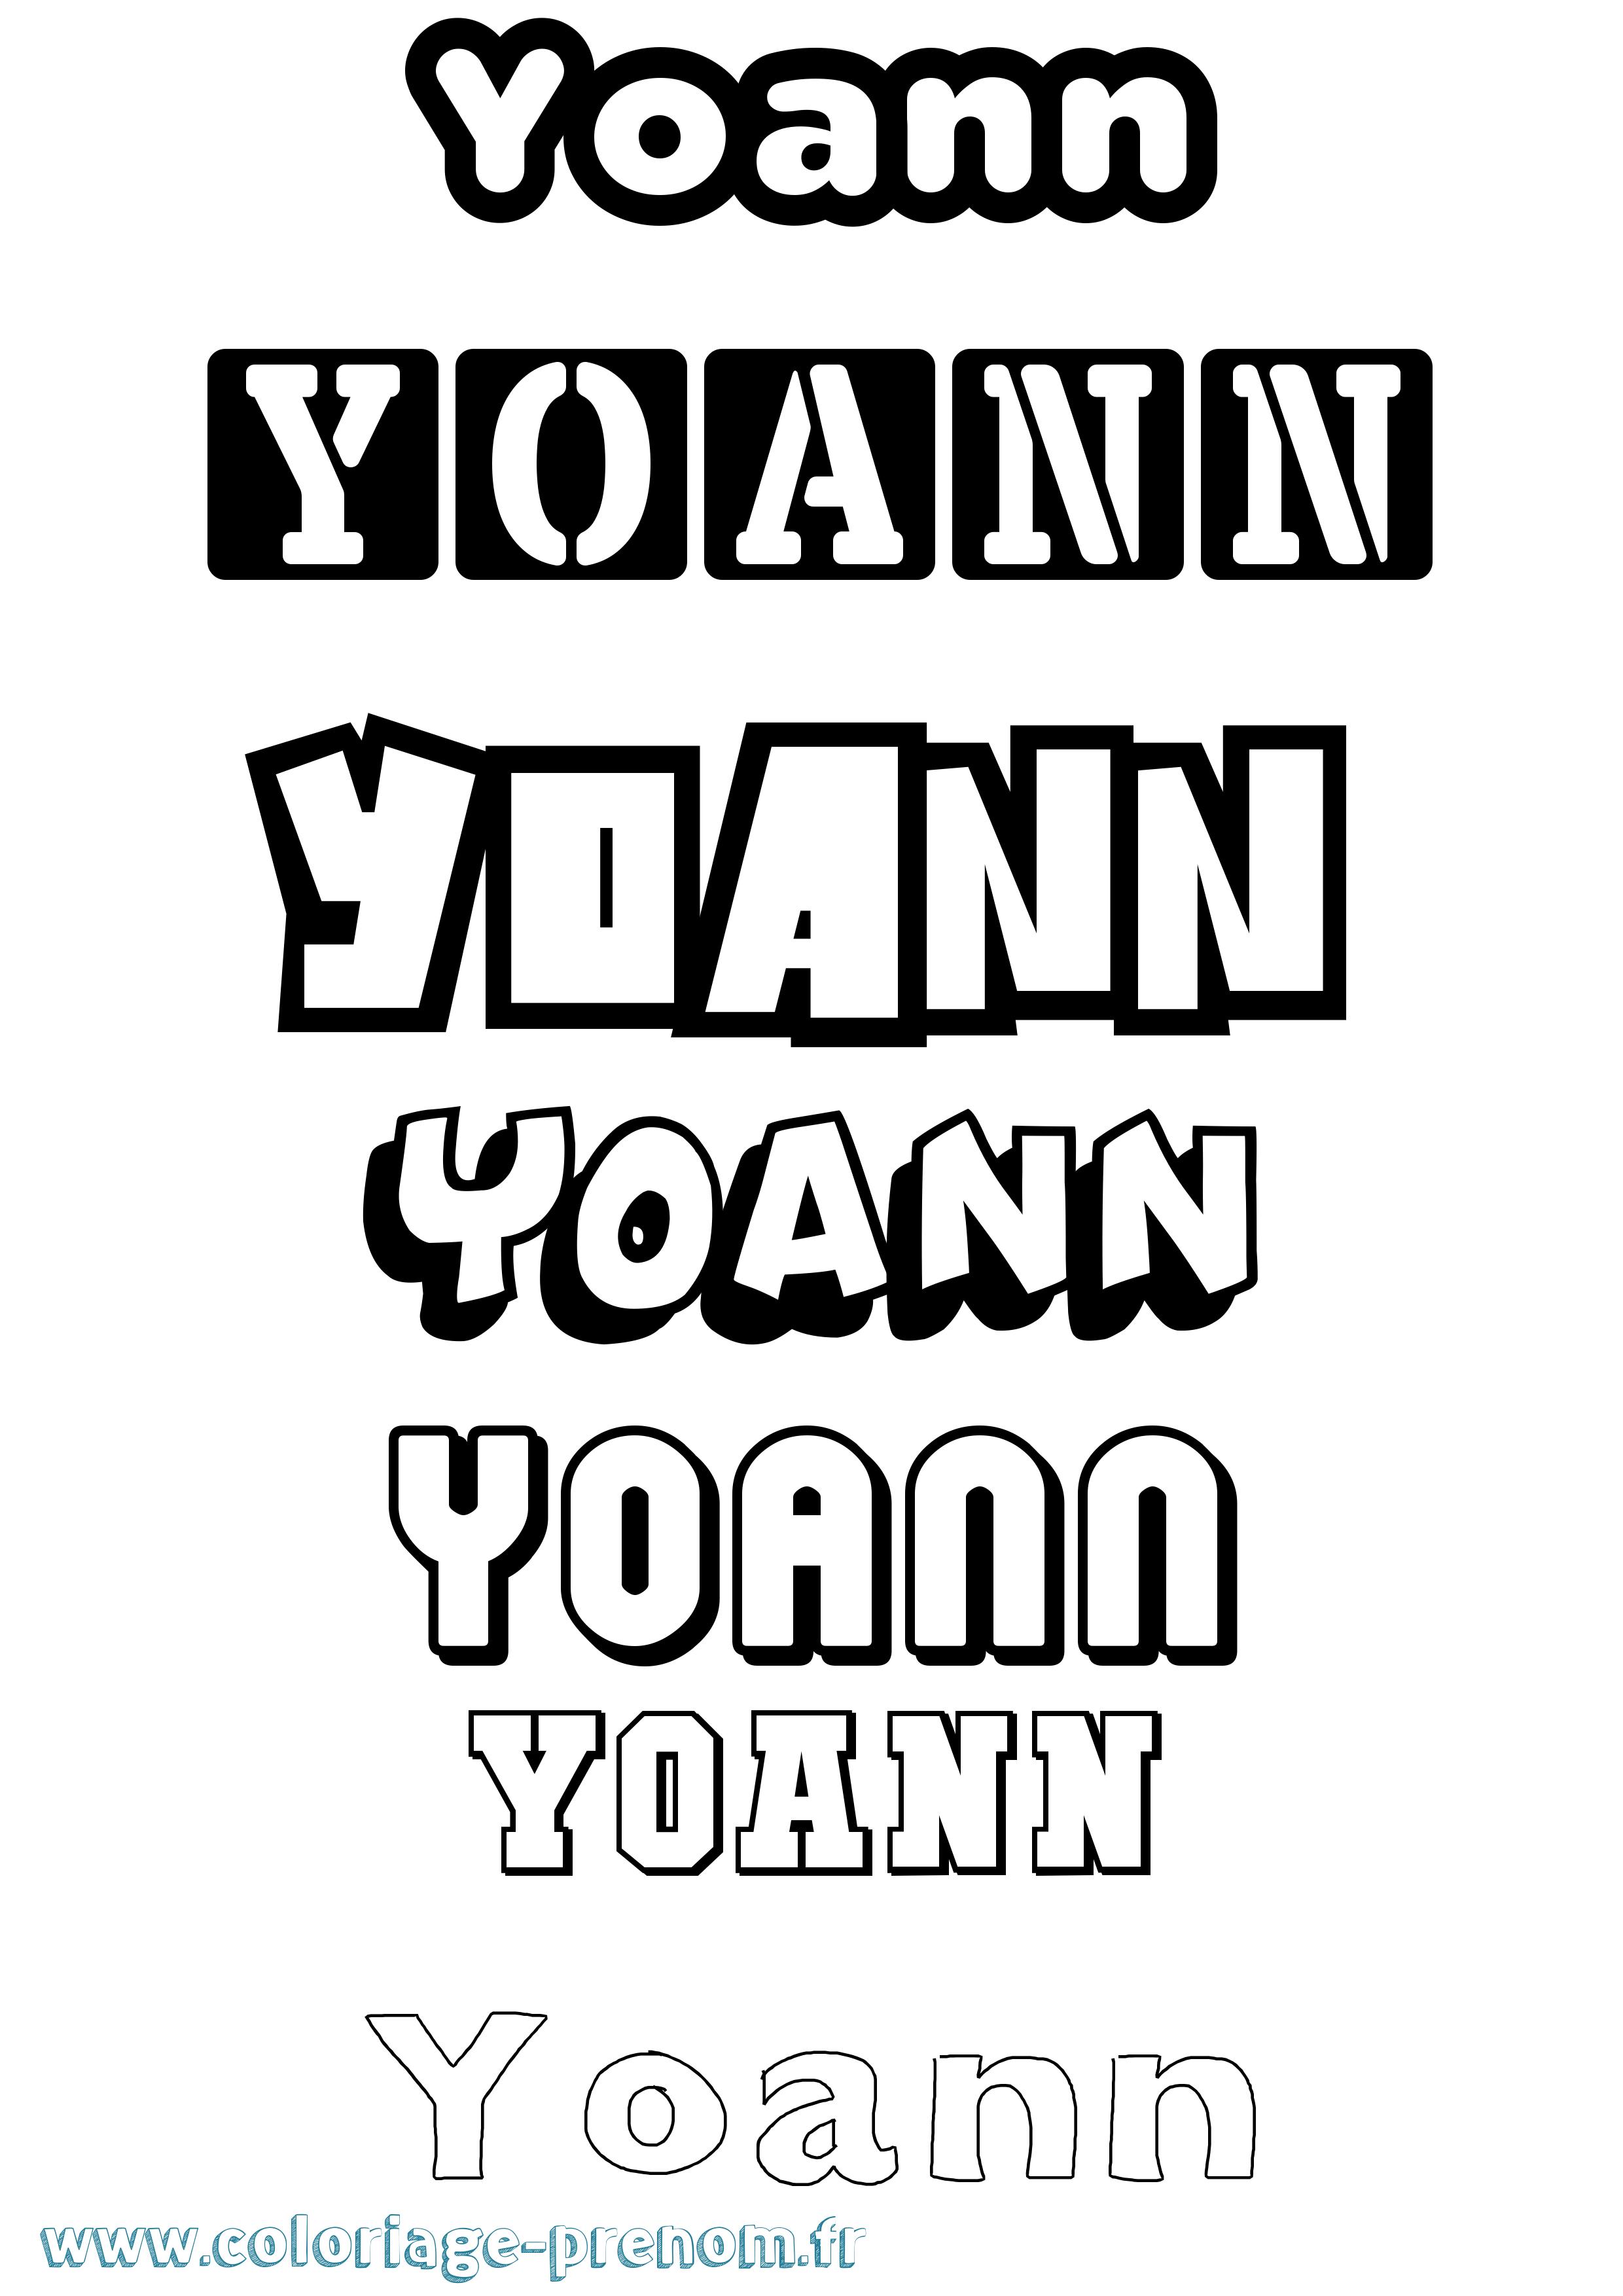 Coloriage prénom Yoann